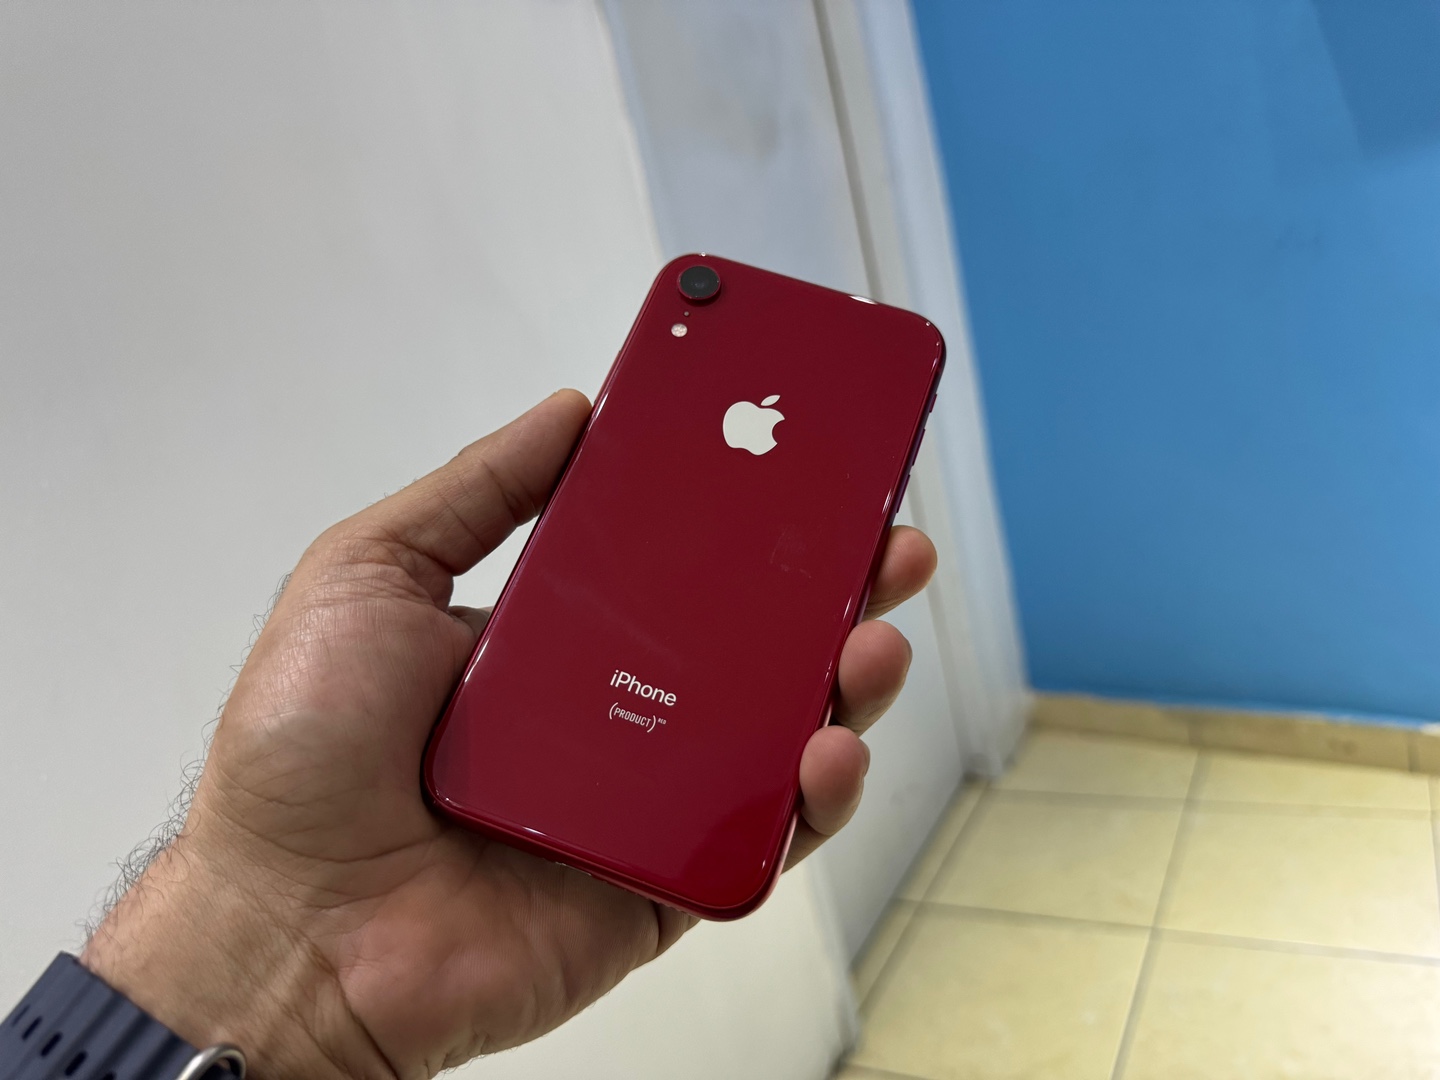 celulares y tabletas - iPhone XR 64GB Usado Red(Product), Desbloqueado, Garantía, $ 12,300 NEG|